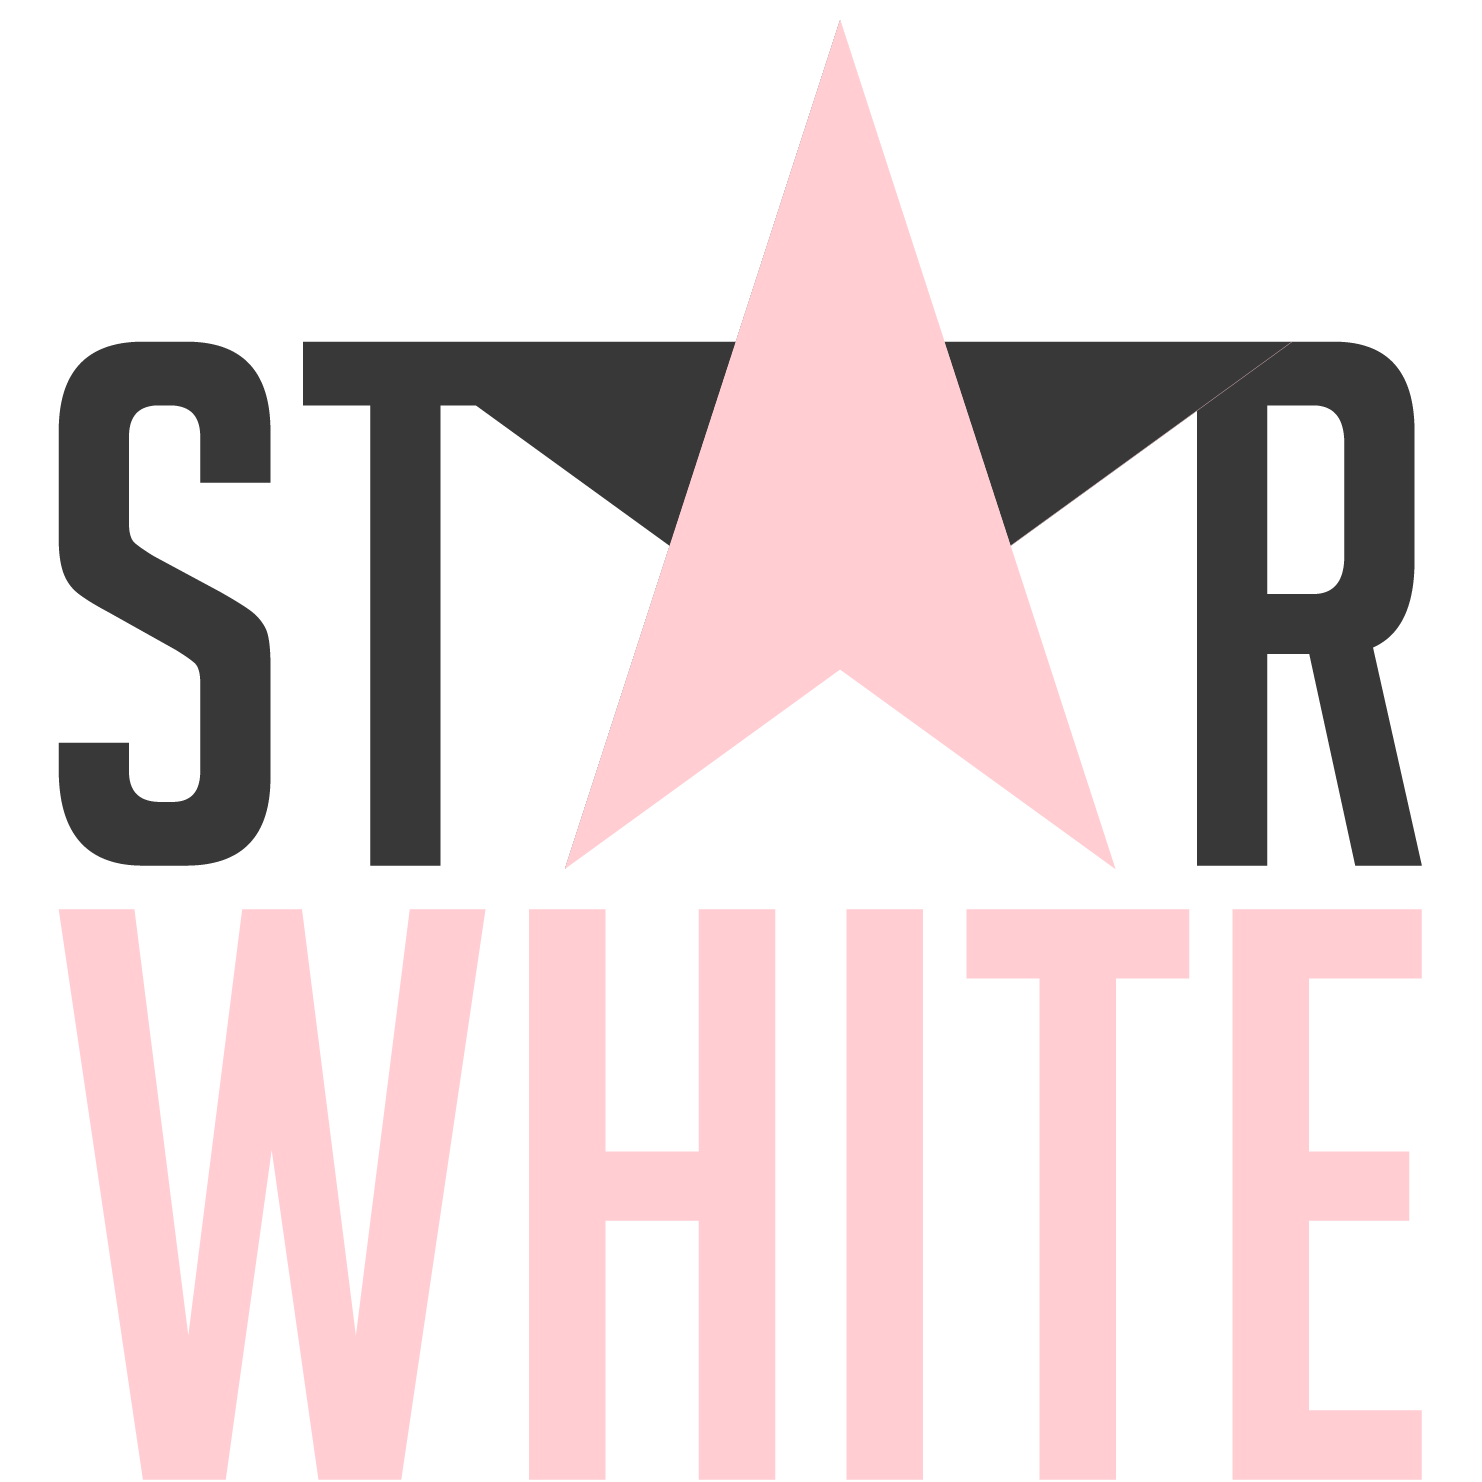 Star White Teeth Logo